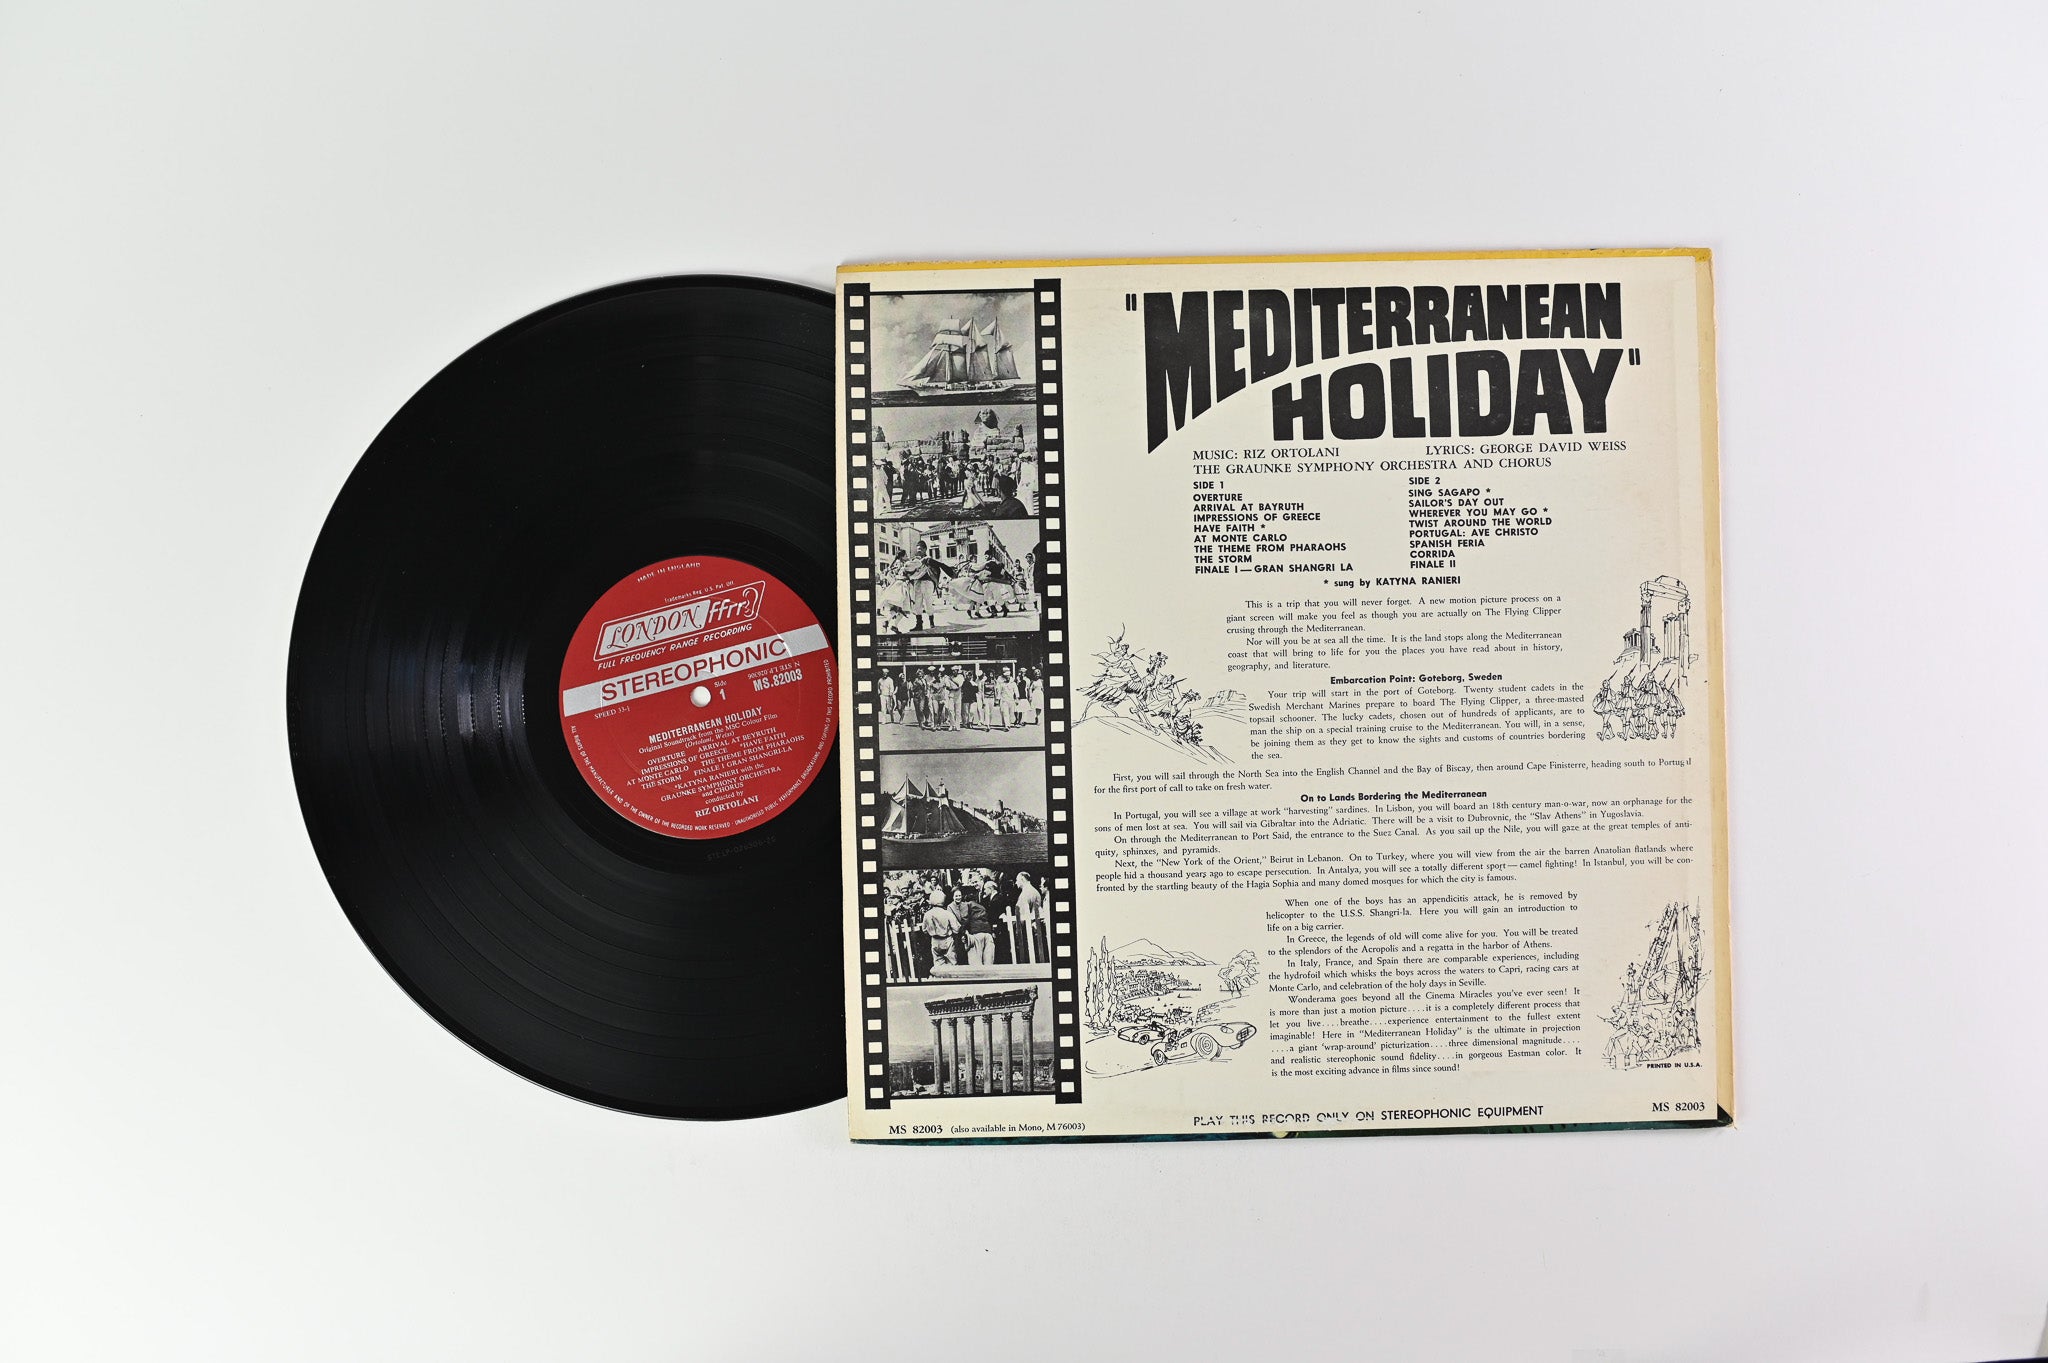 Riz Ortolani - Mediterranean Holiday (Original Soundtrack) on London Records